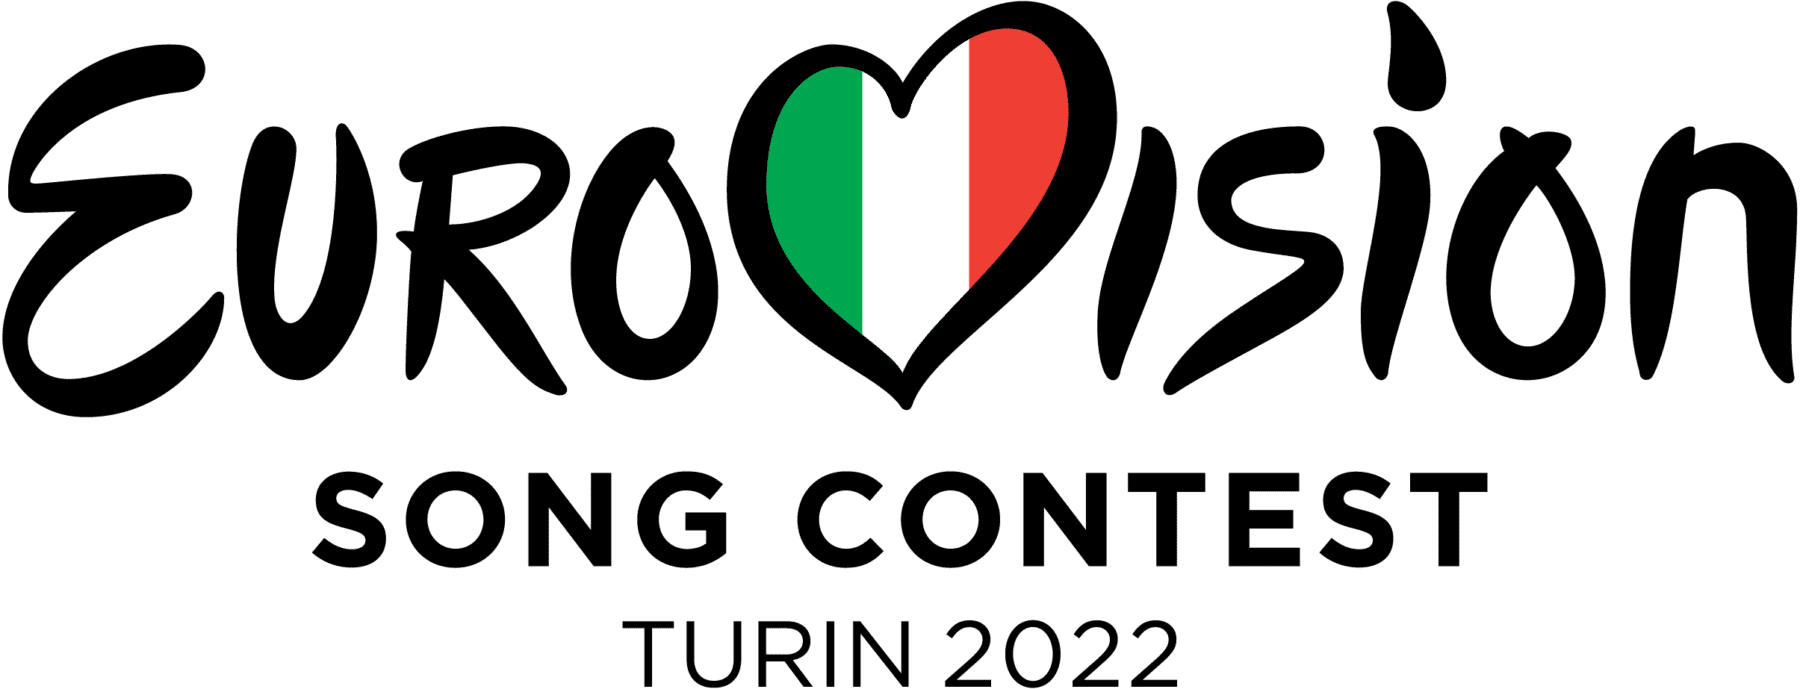 Eurovision logo 2022 Italian flag